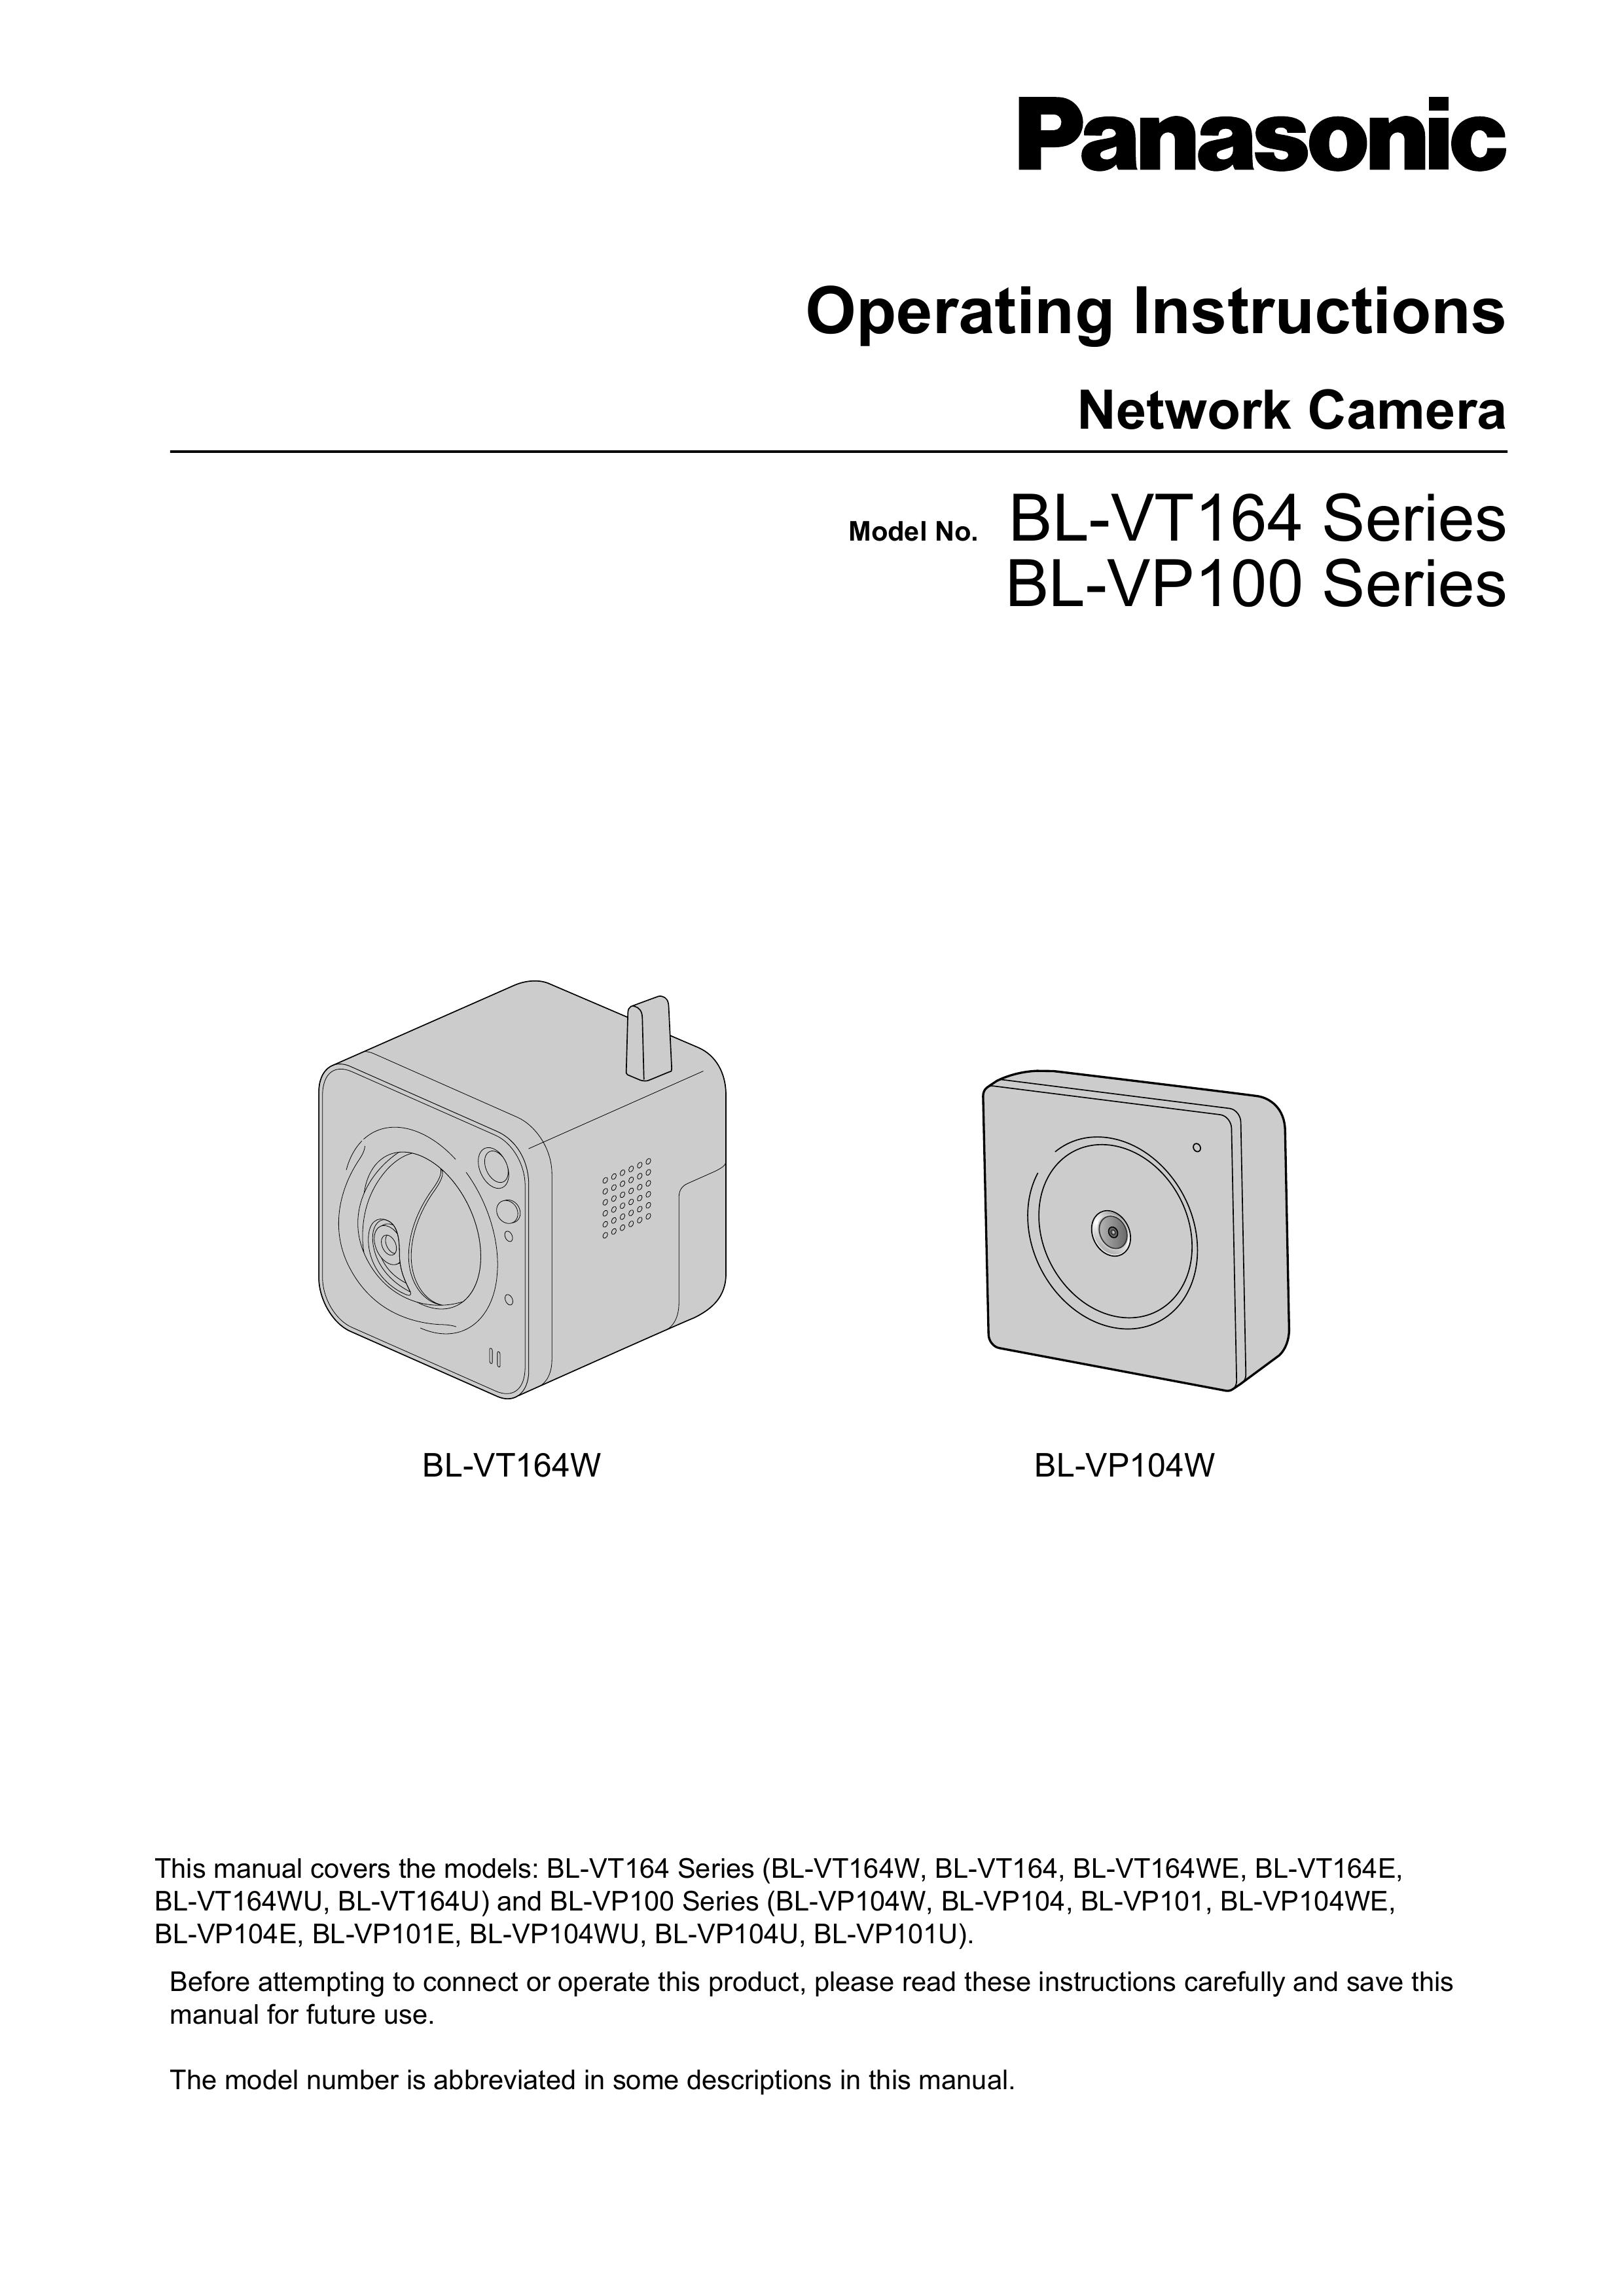 Panasonic BL-VP104W Security Camera User Manual